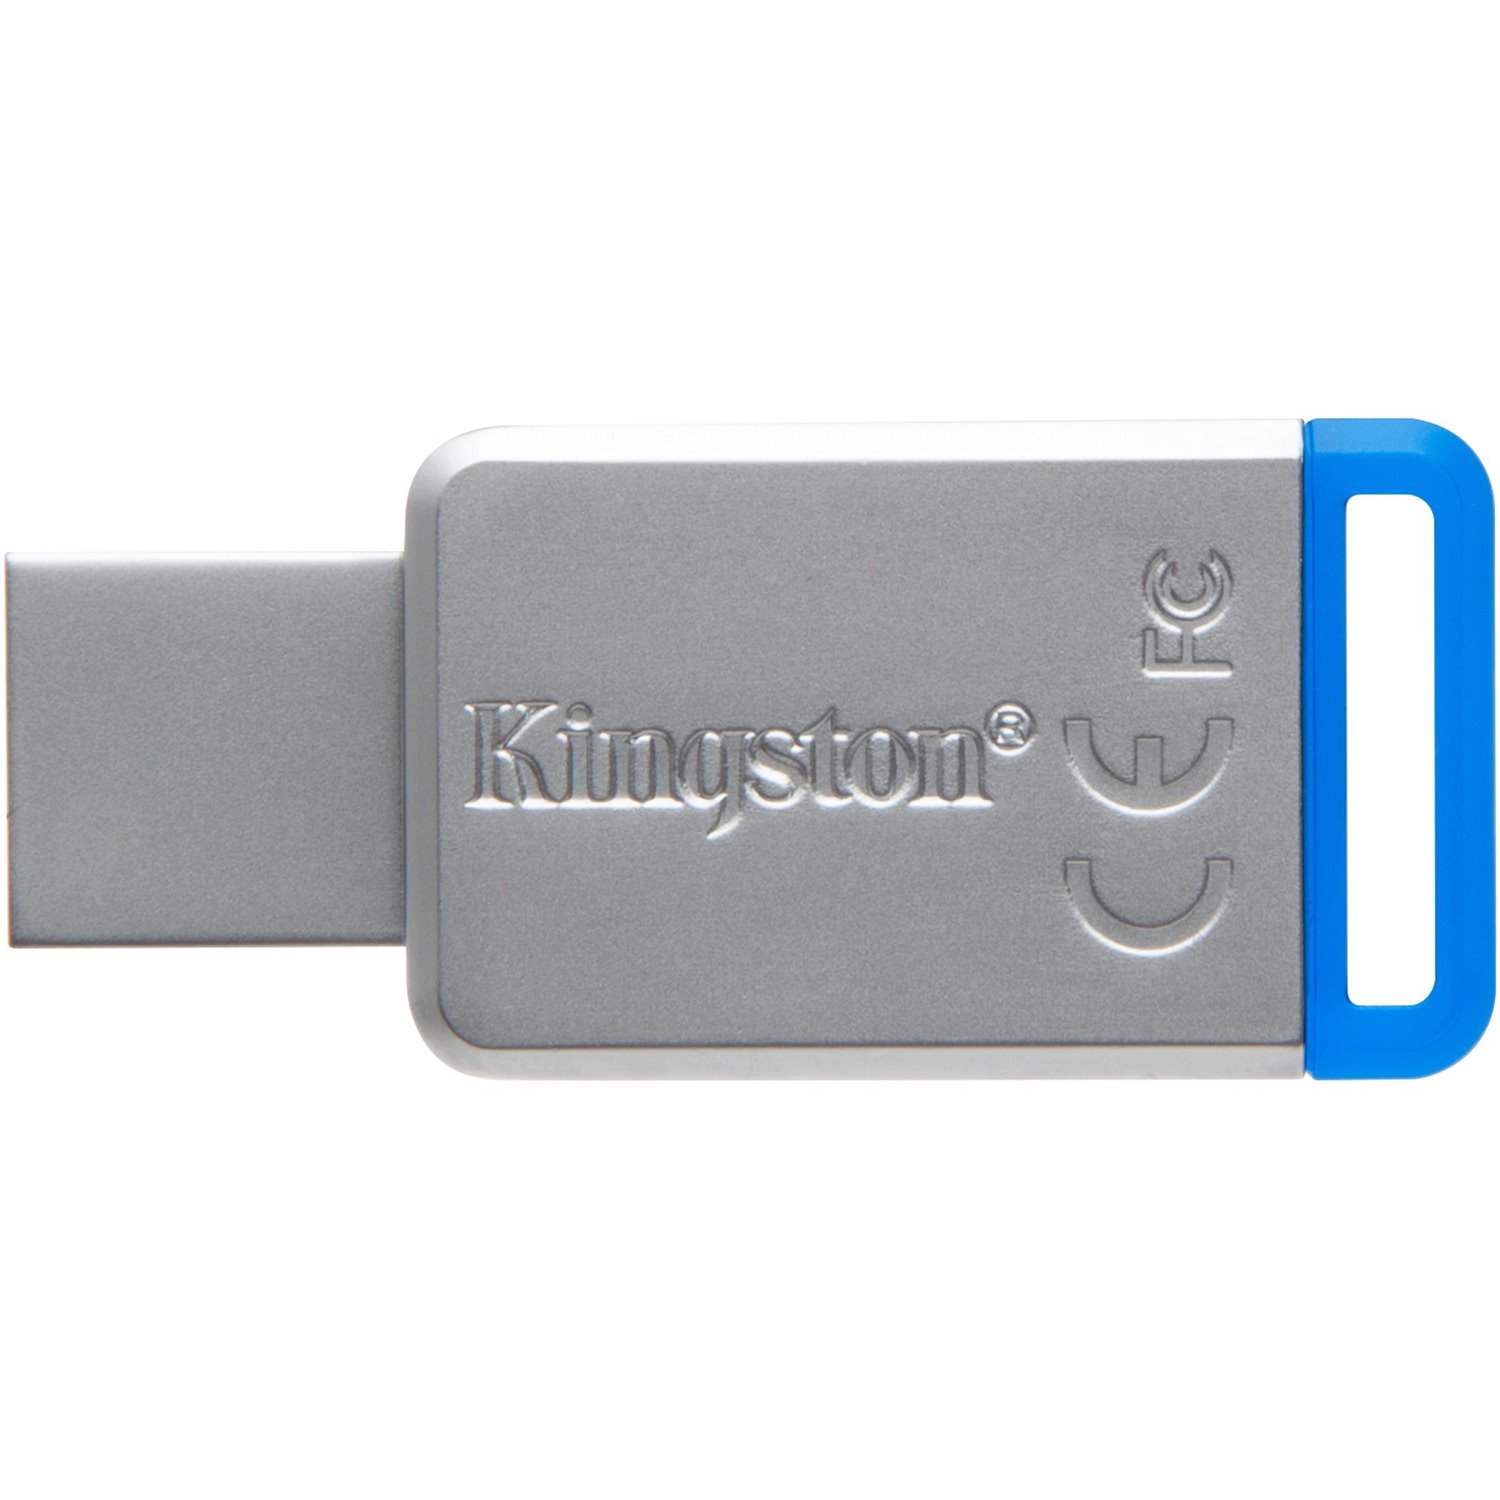 Kingston DataTraveler 50 64 GB USB 3.0 Flash Drive - Blue